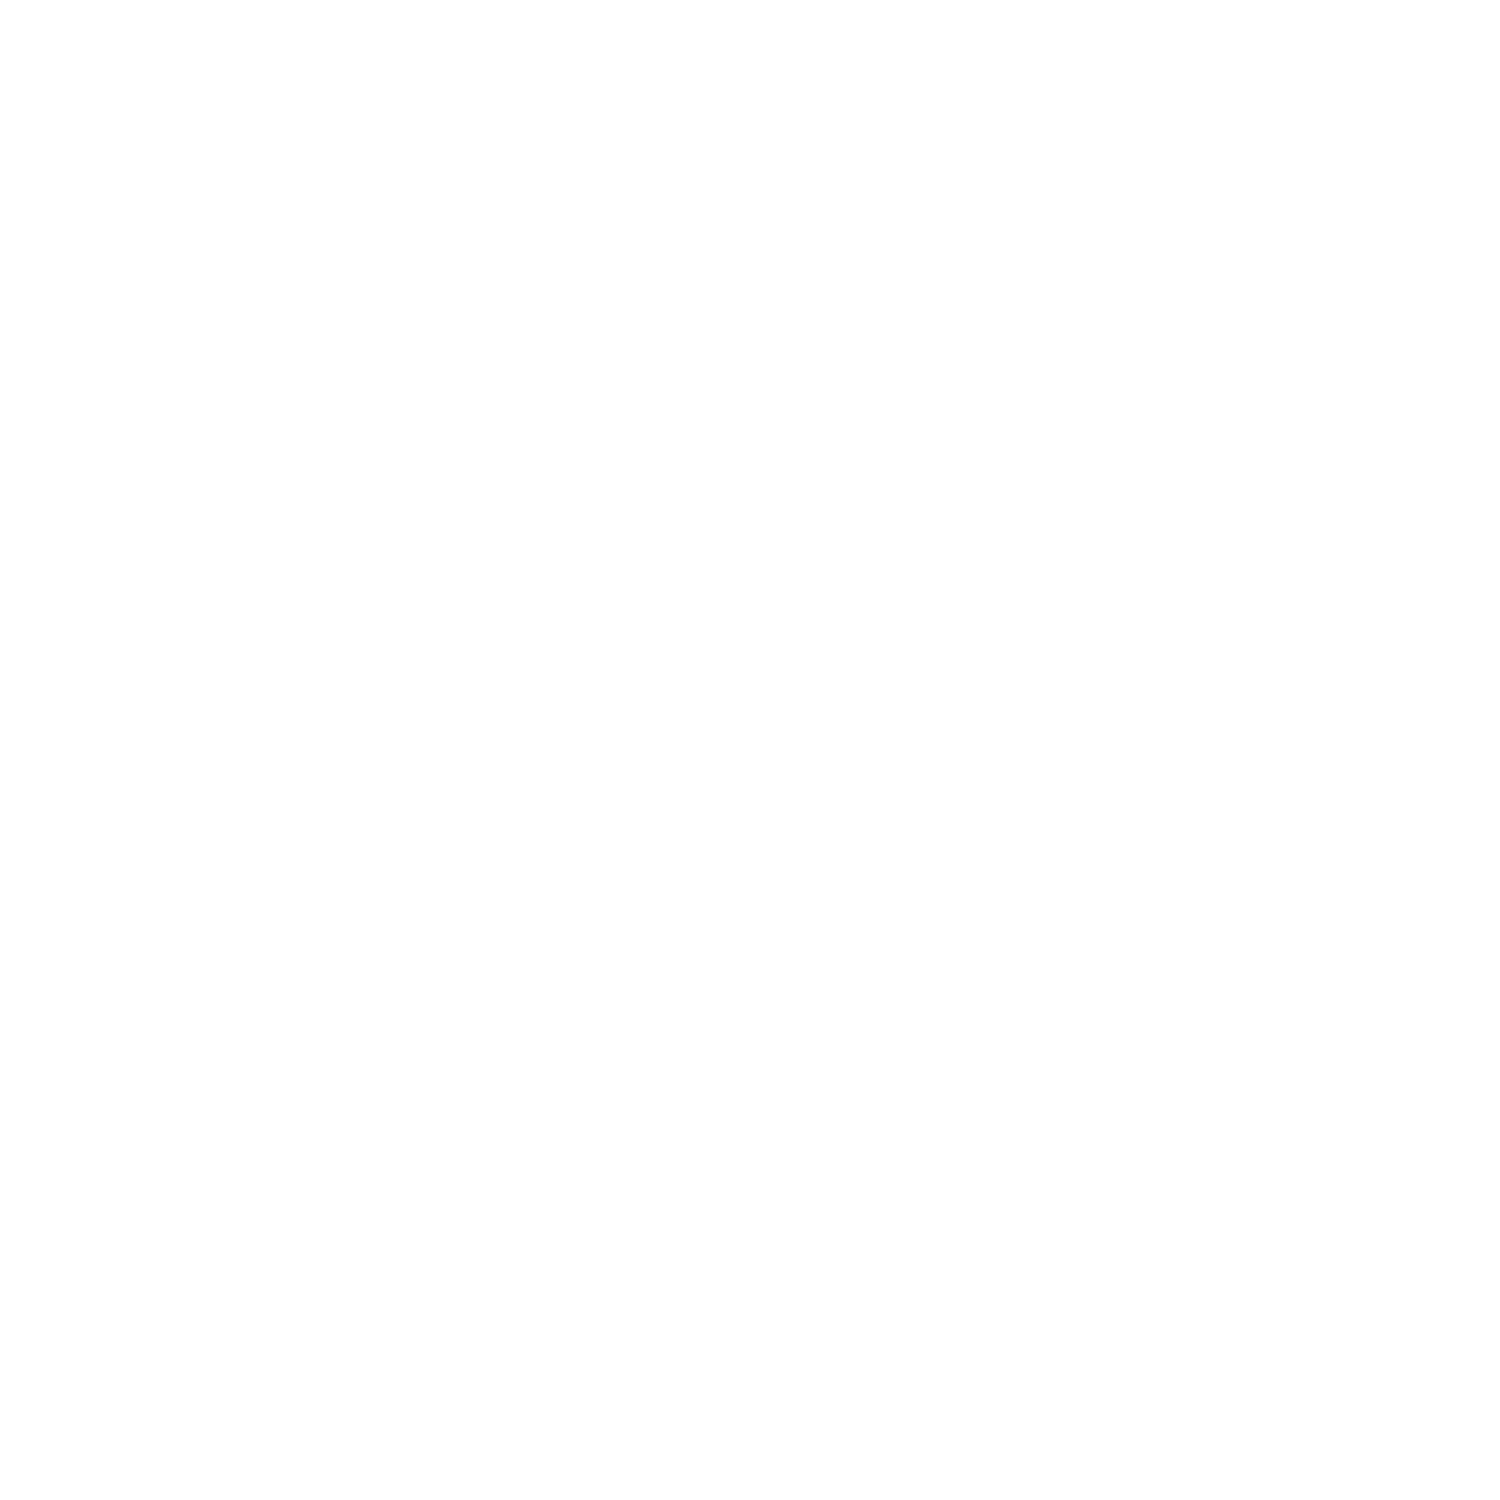 Lakeside Presbyterian Church San Francisco